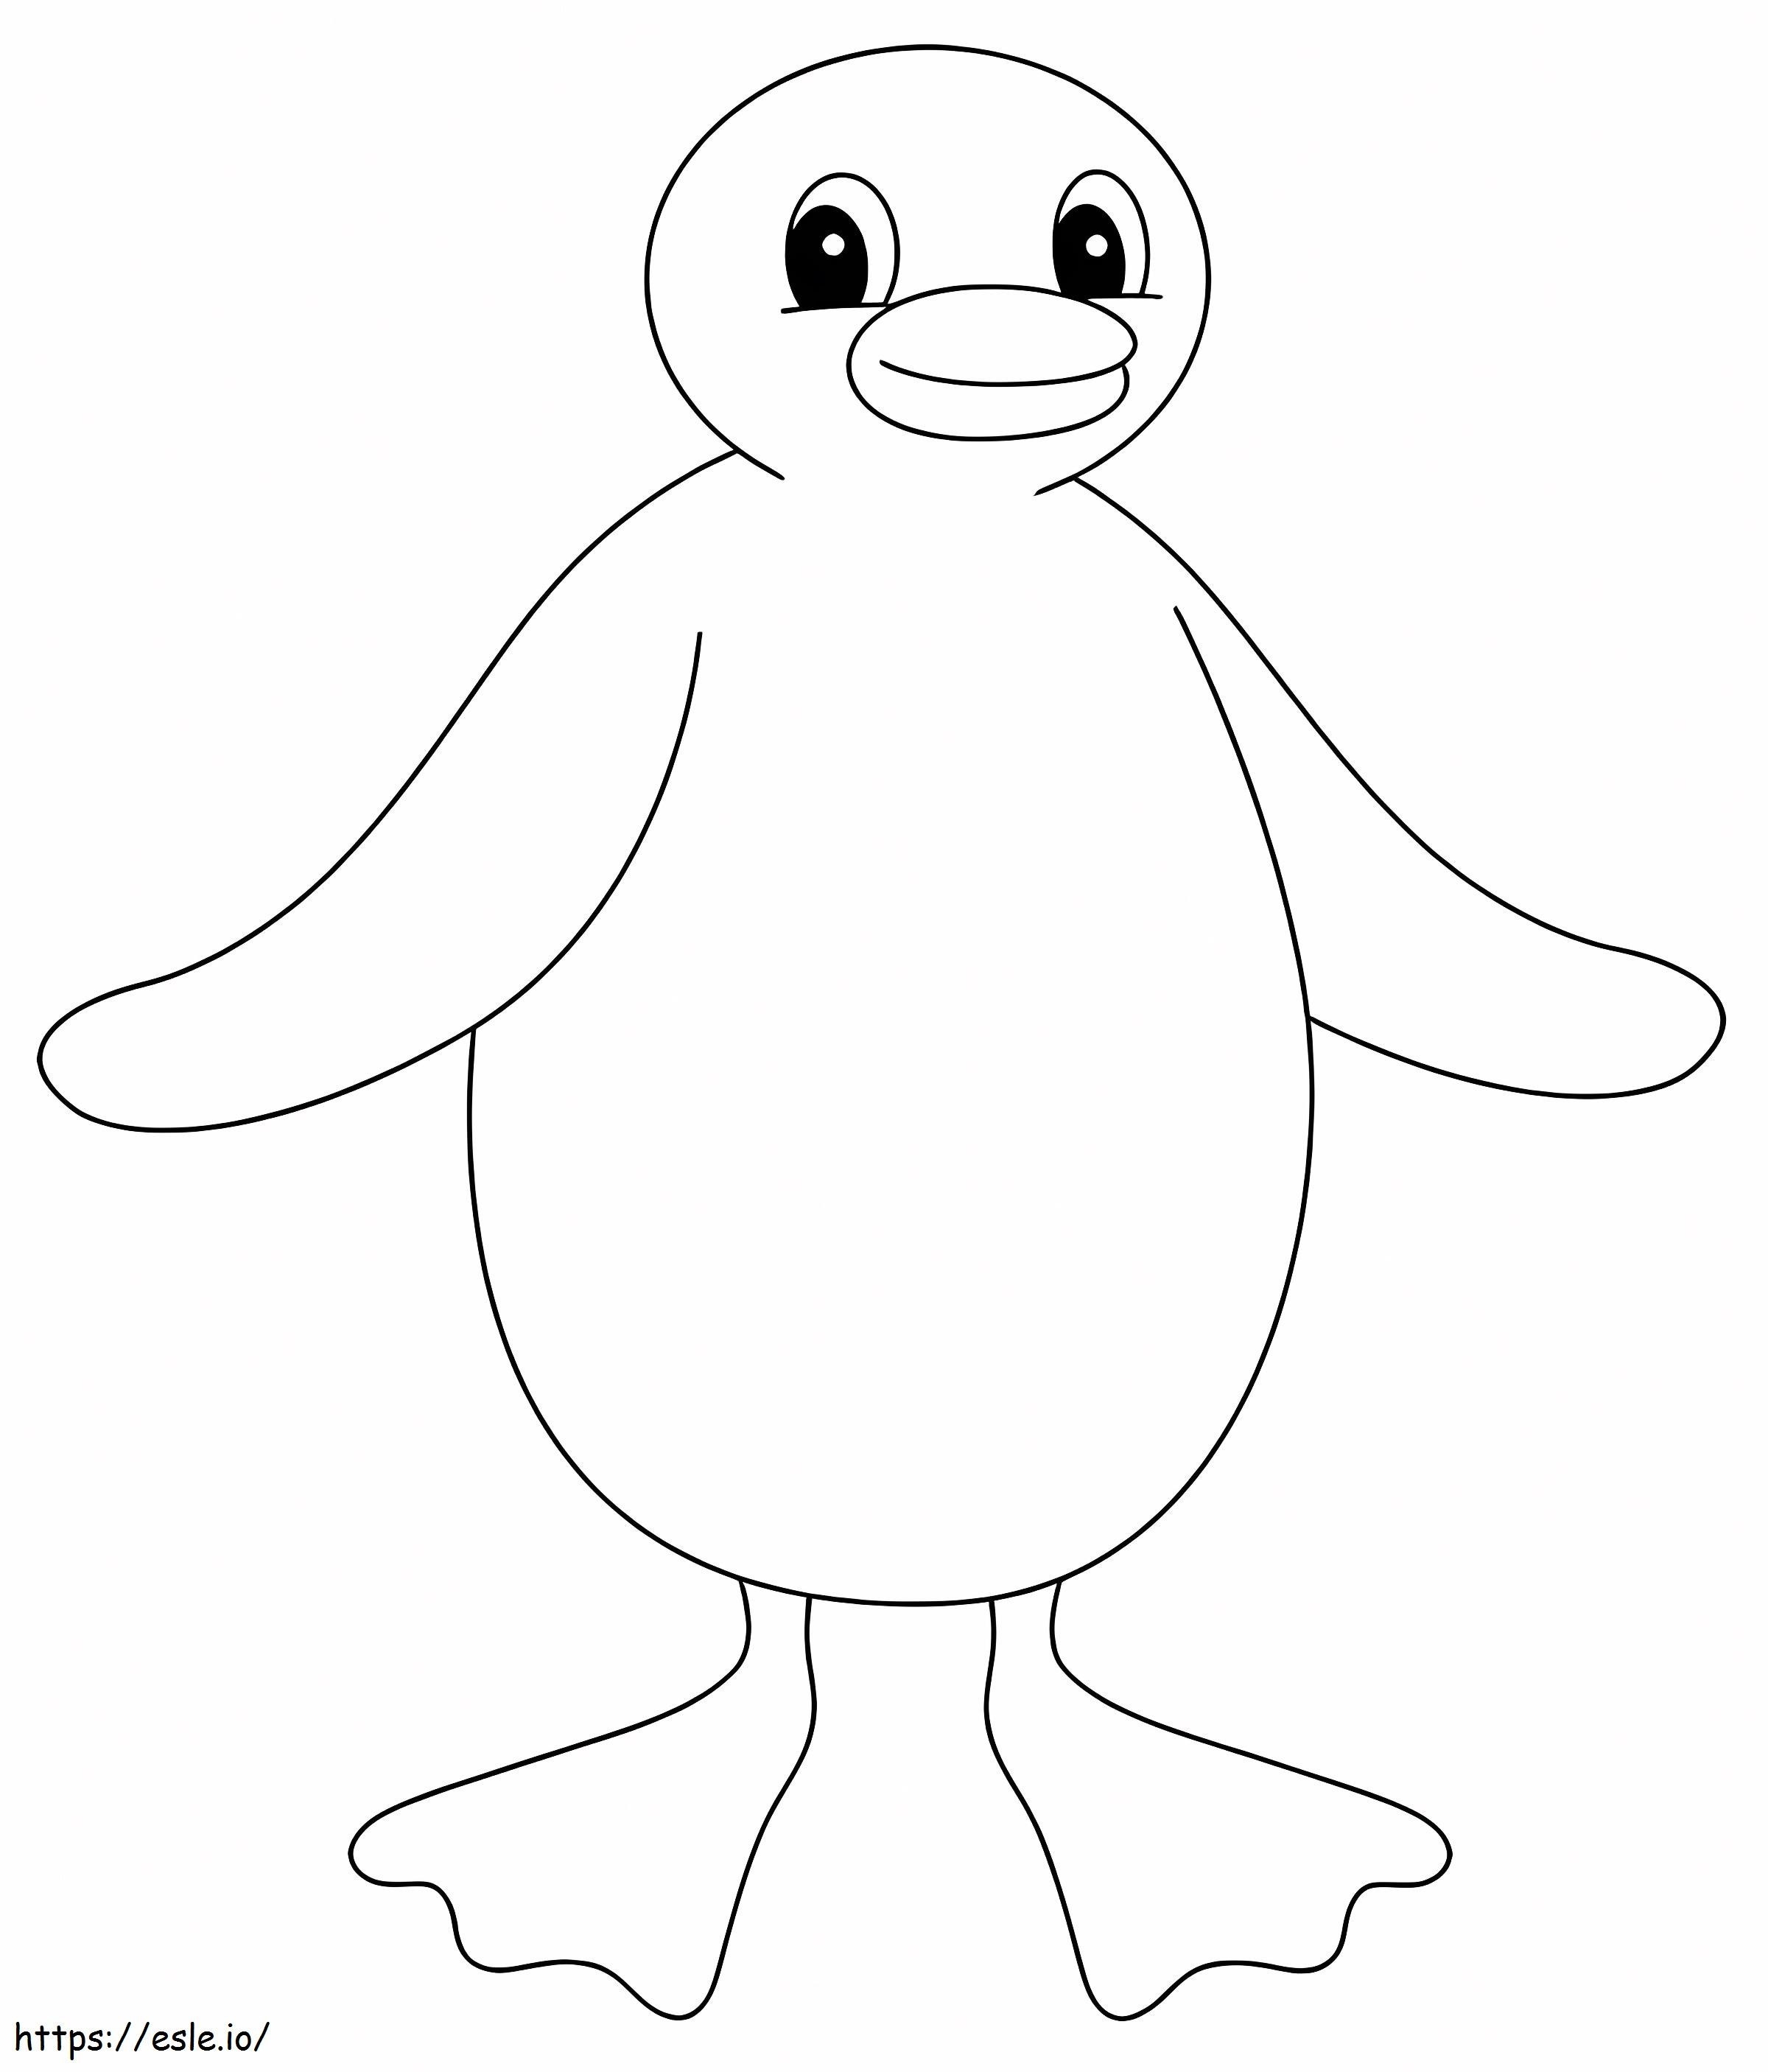 Cute Pingu coloring page